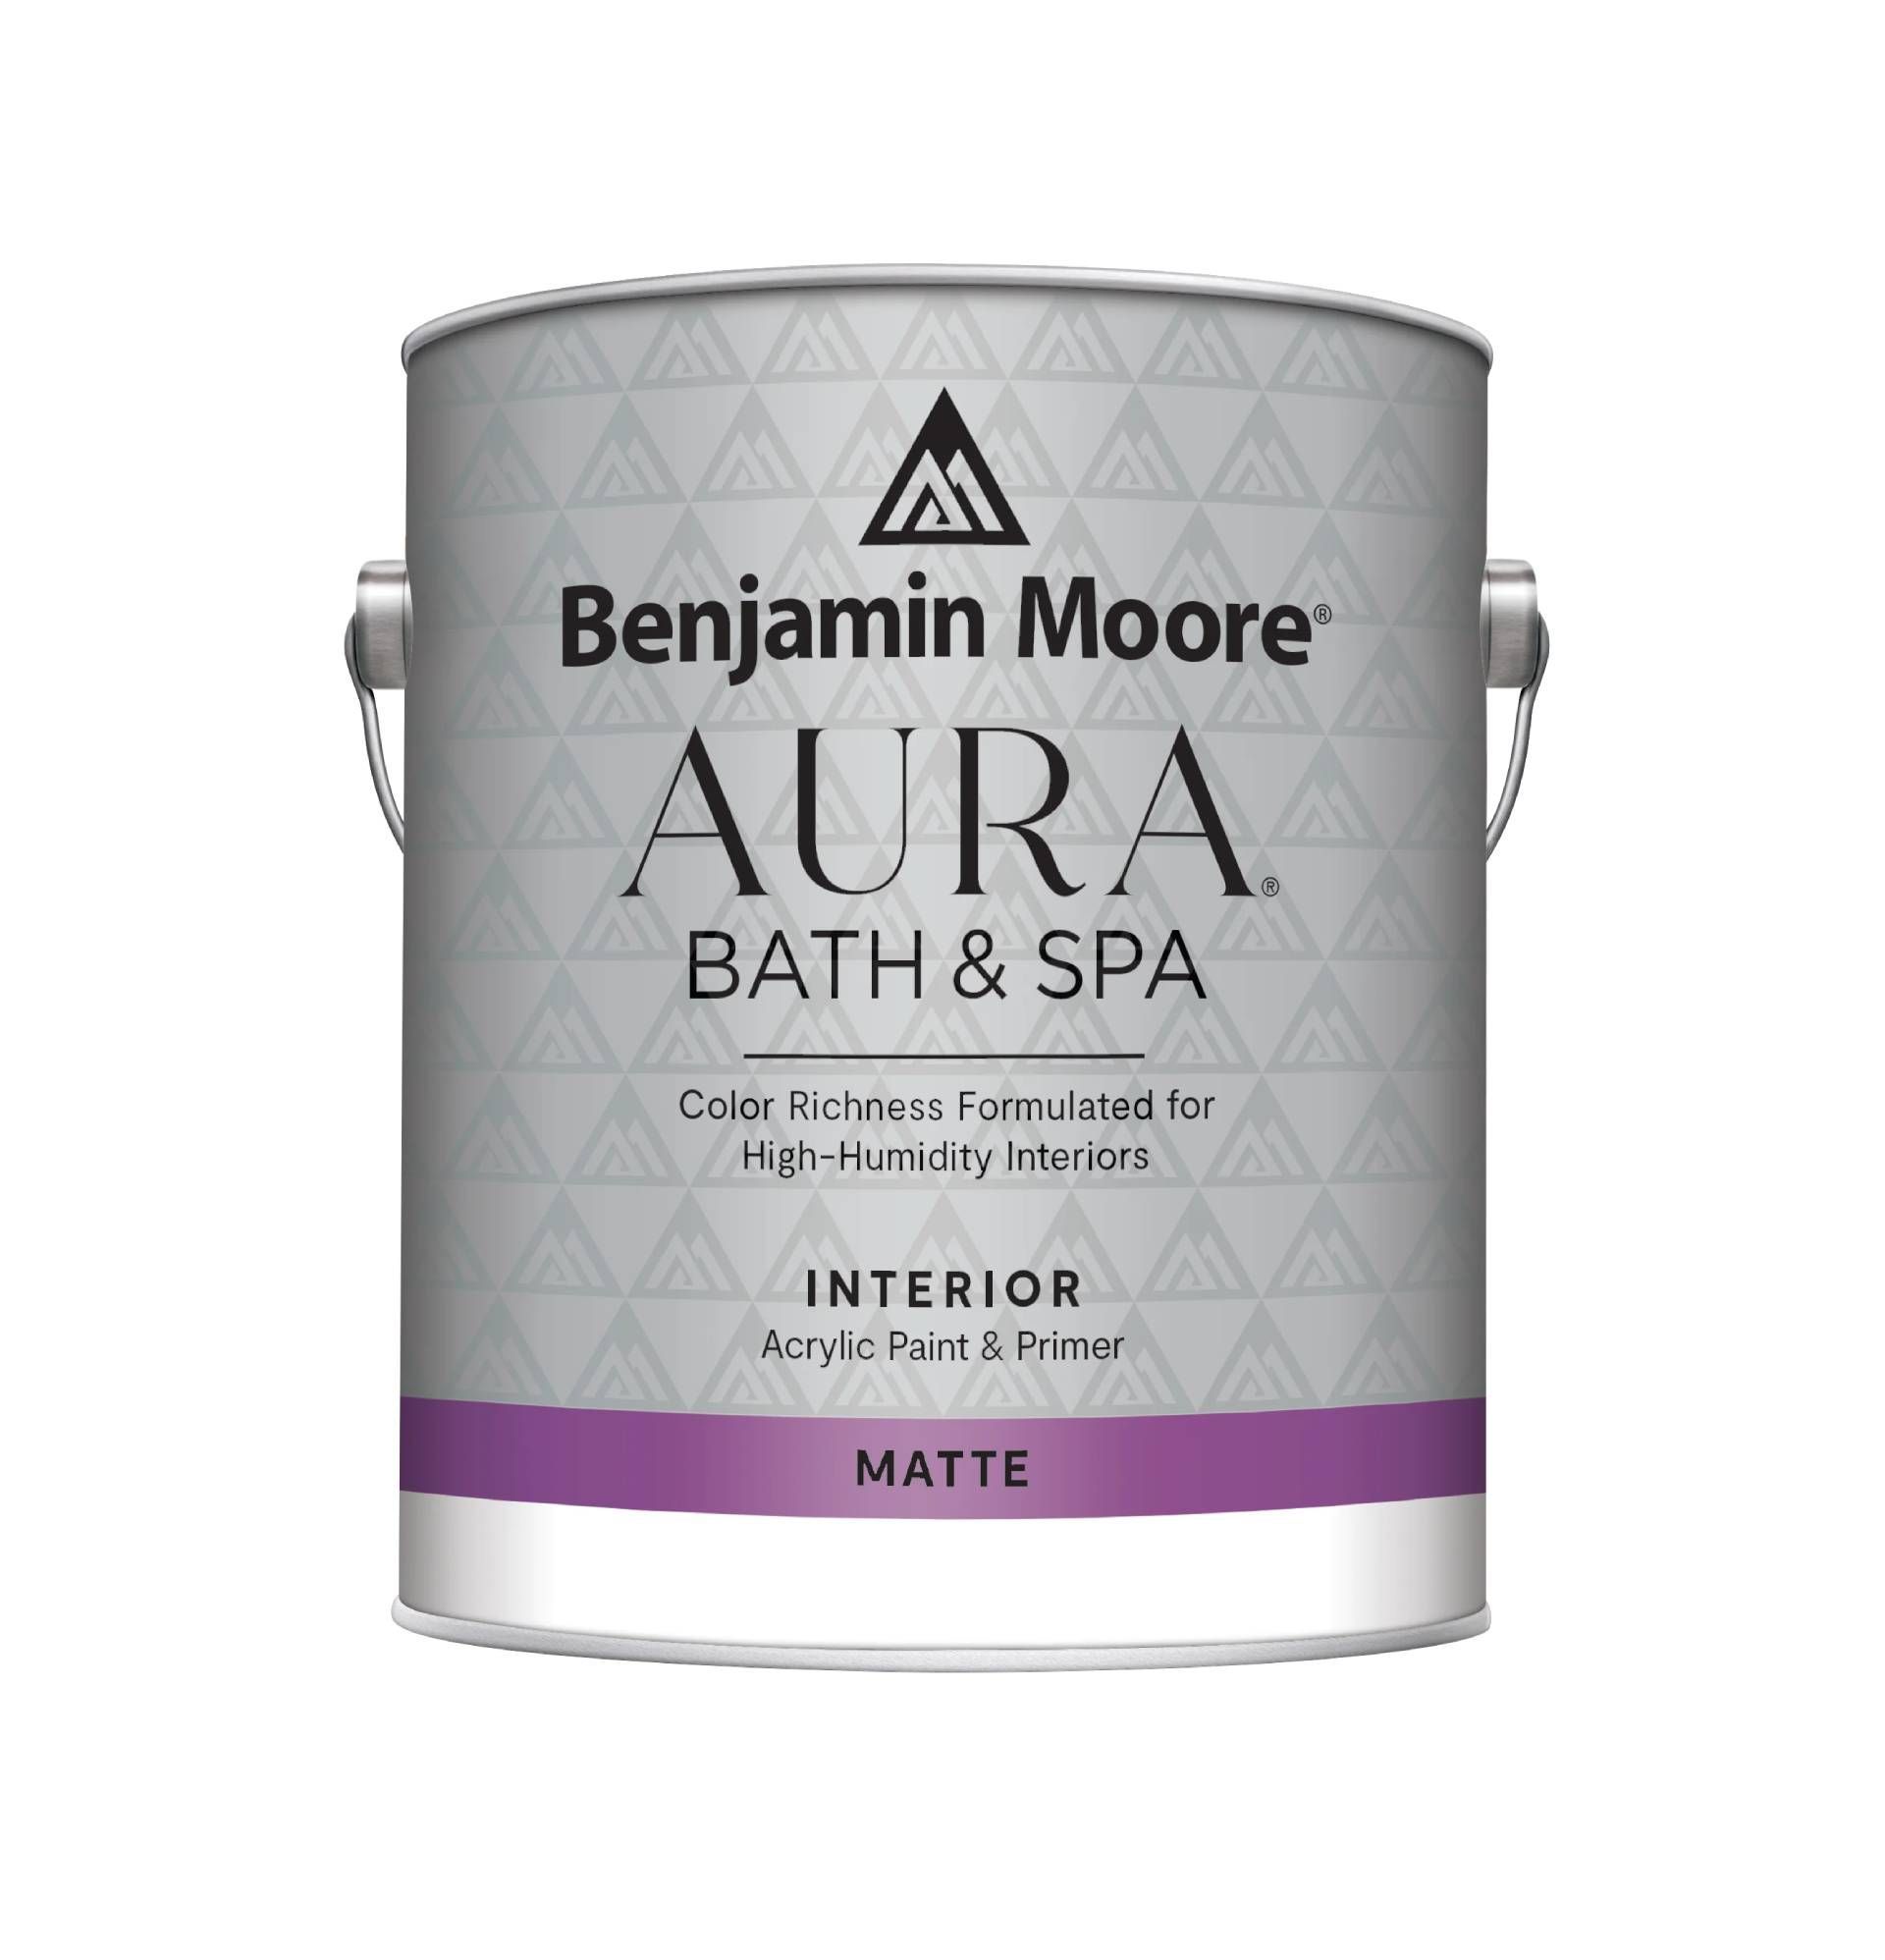 Benjamin Moore Aura® Bath & Spa Paint near Fort Lauderdale, Florida (FL)